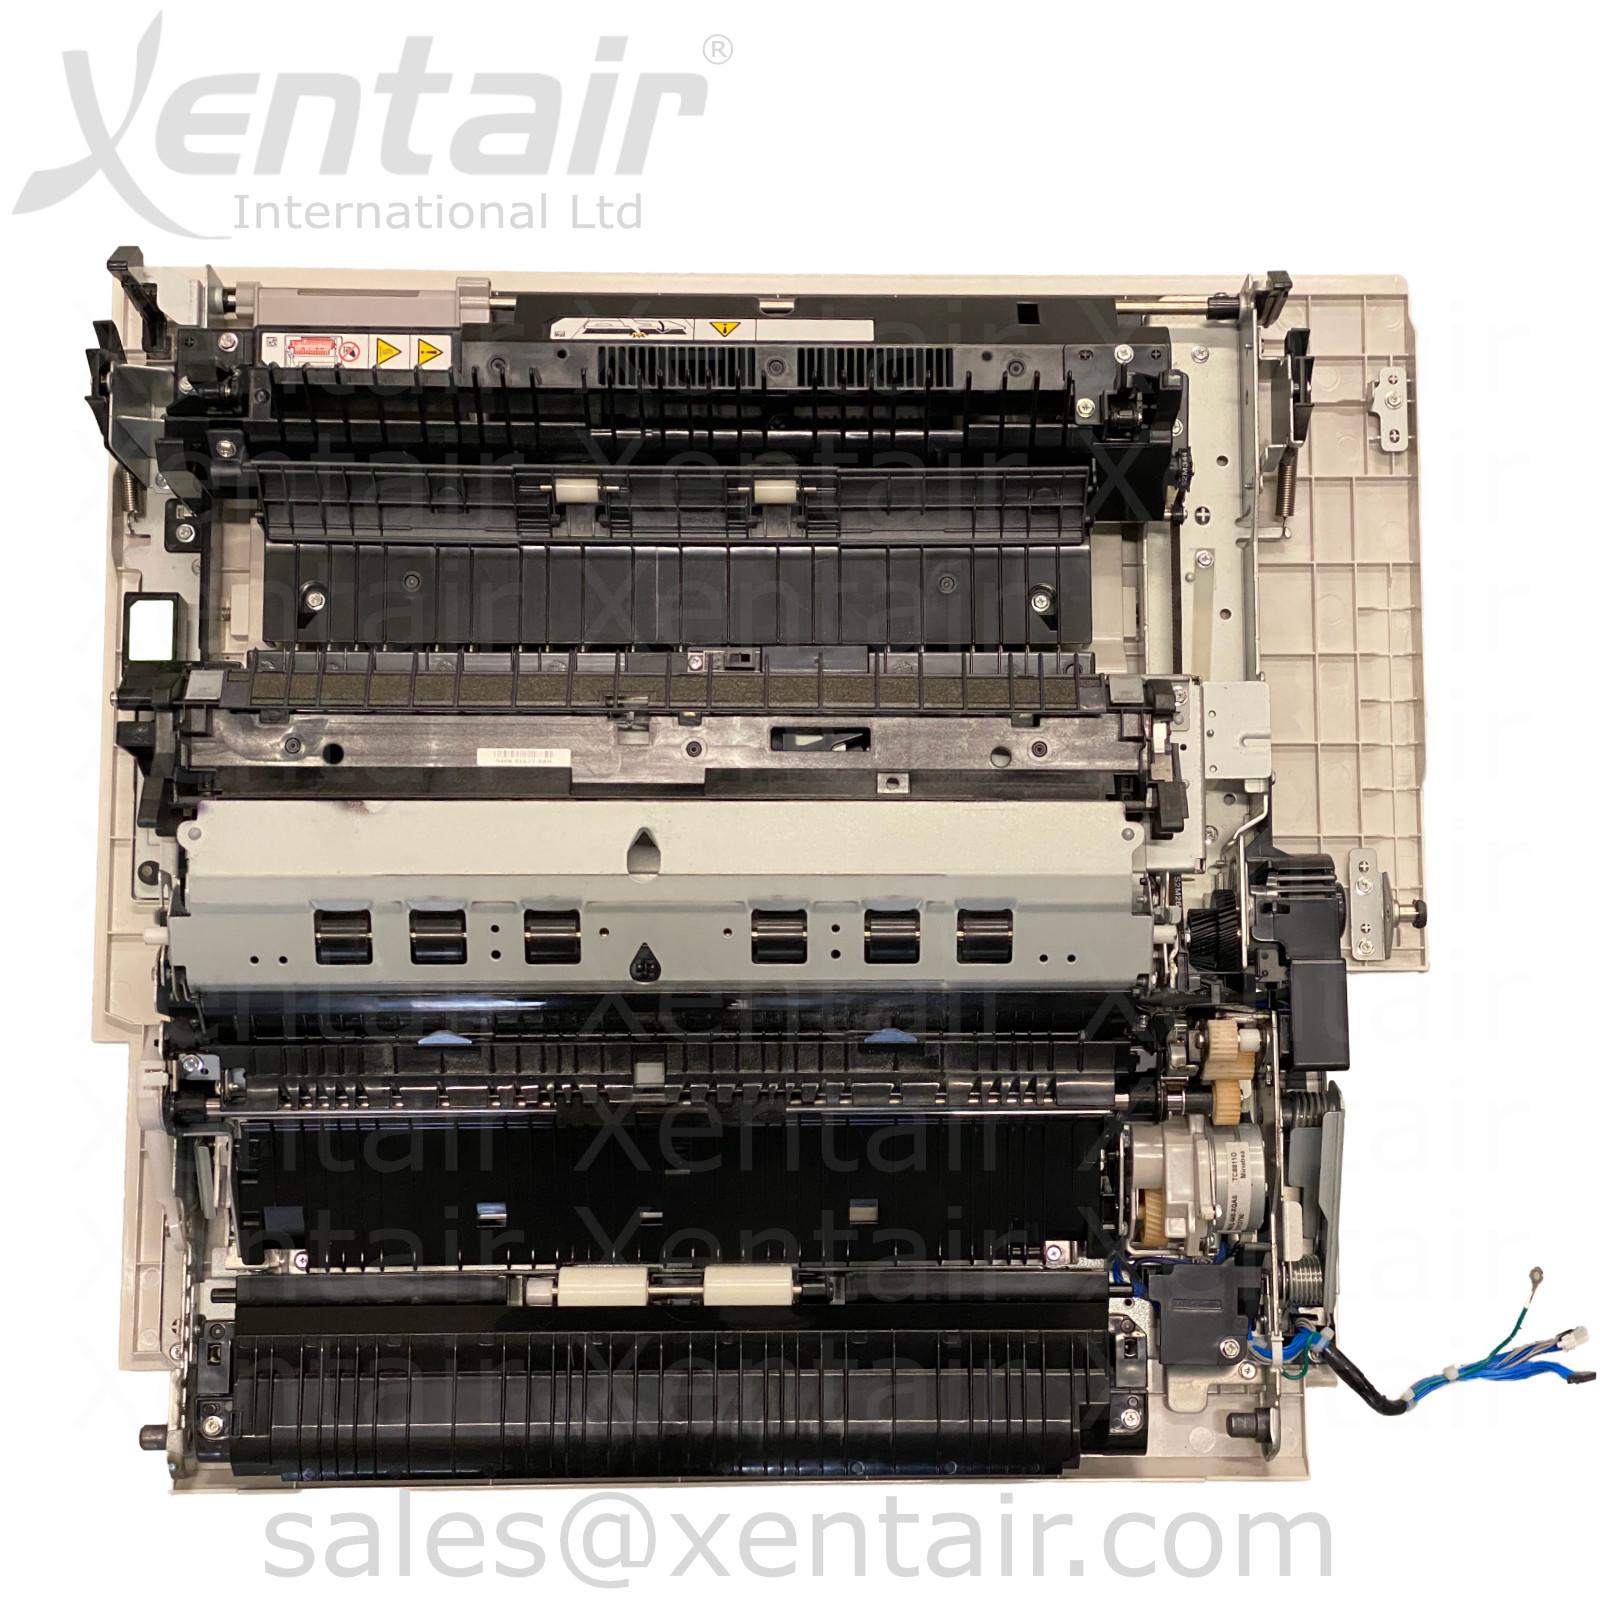 Xerox® VersaLink® C8000 C9000 Left Cover Assembly 859K14040 859K14041 859K14042